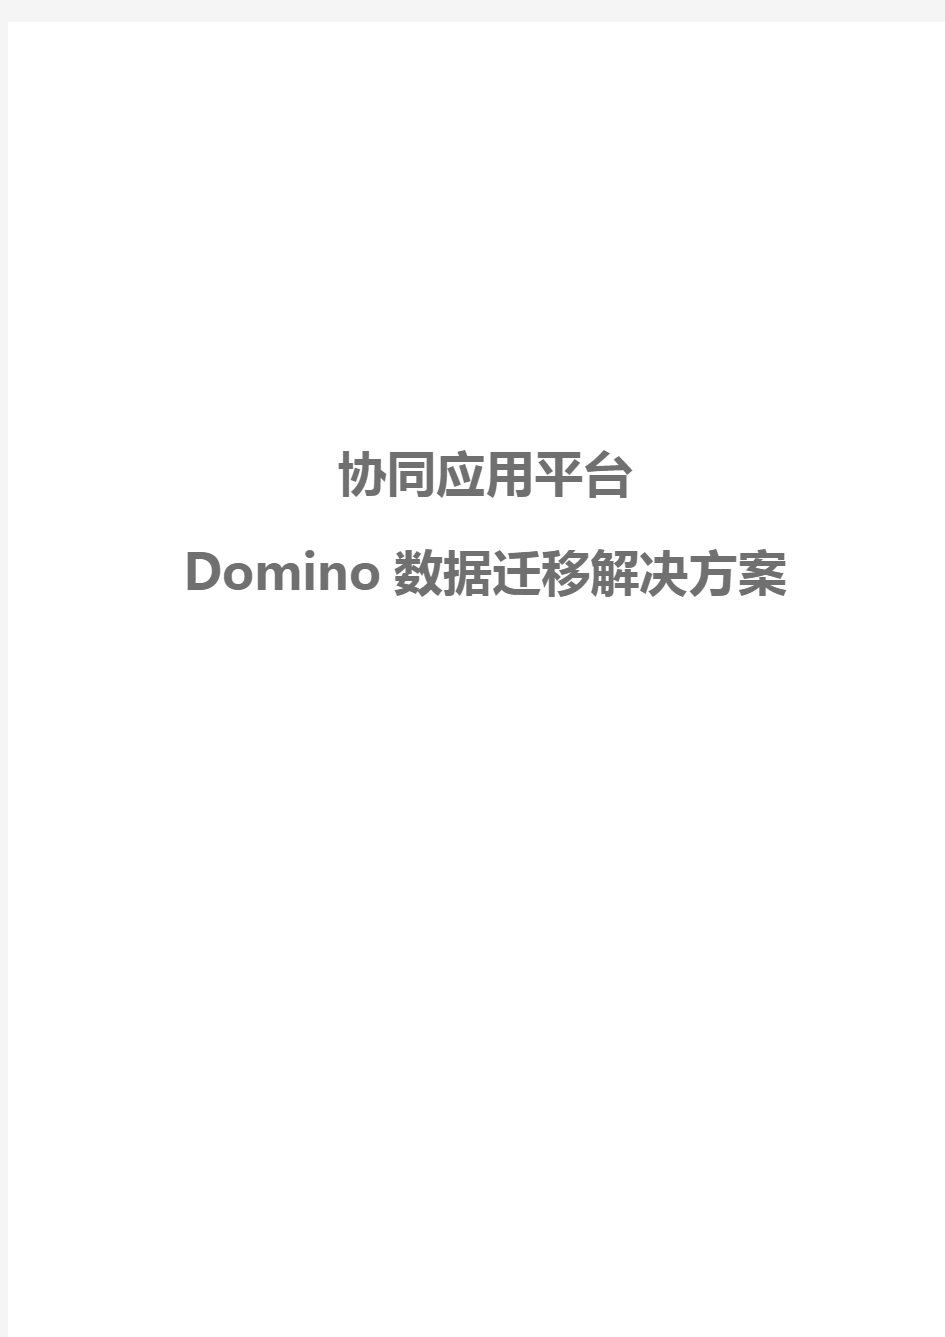 Domino数据迁移解决方案